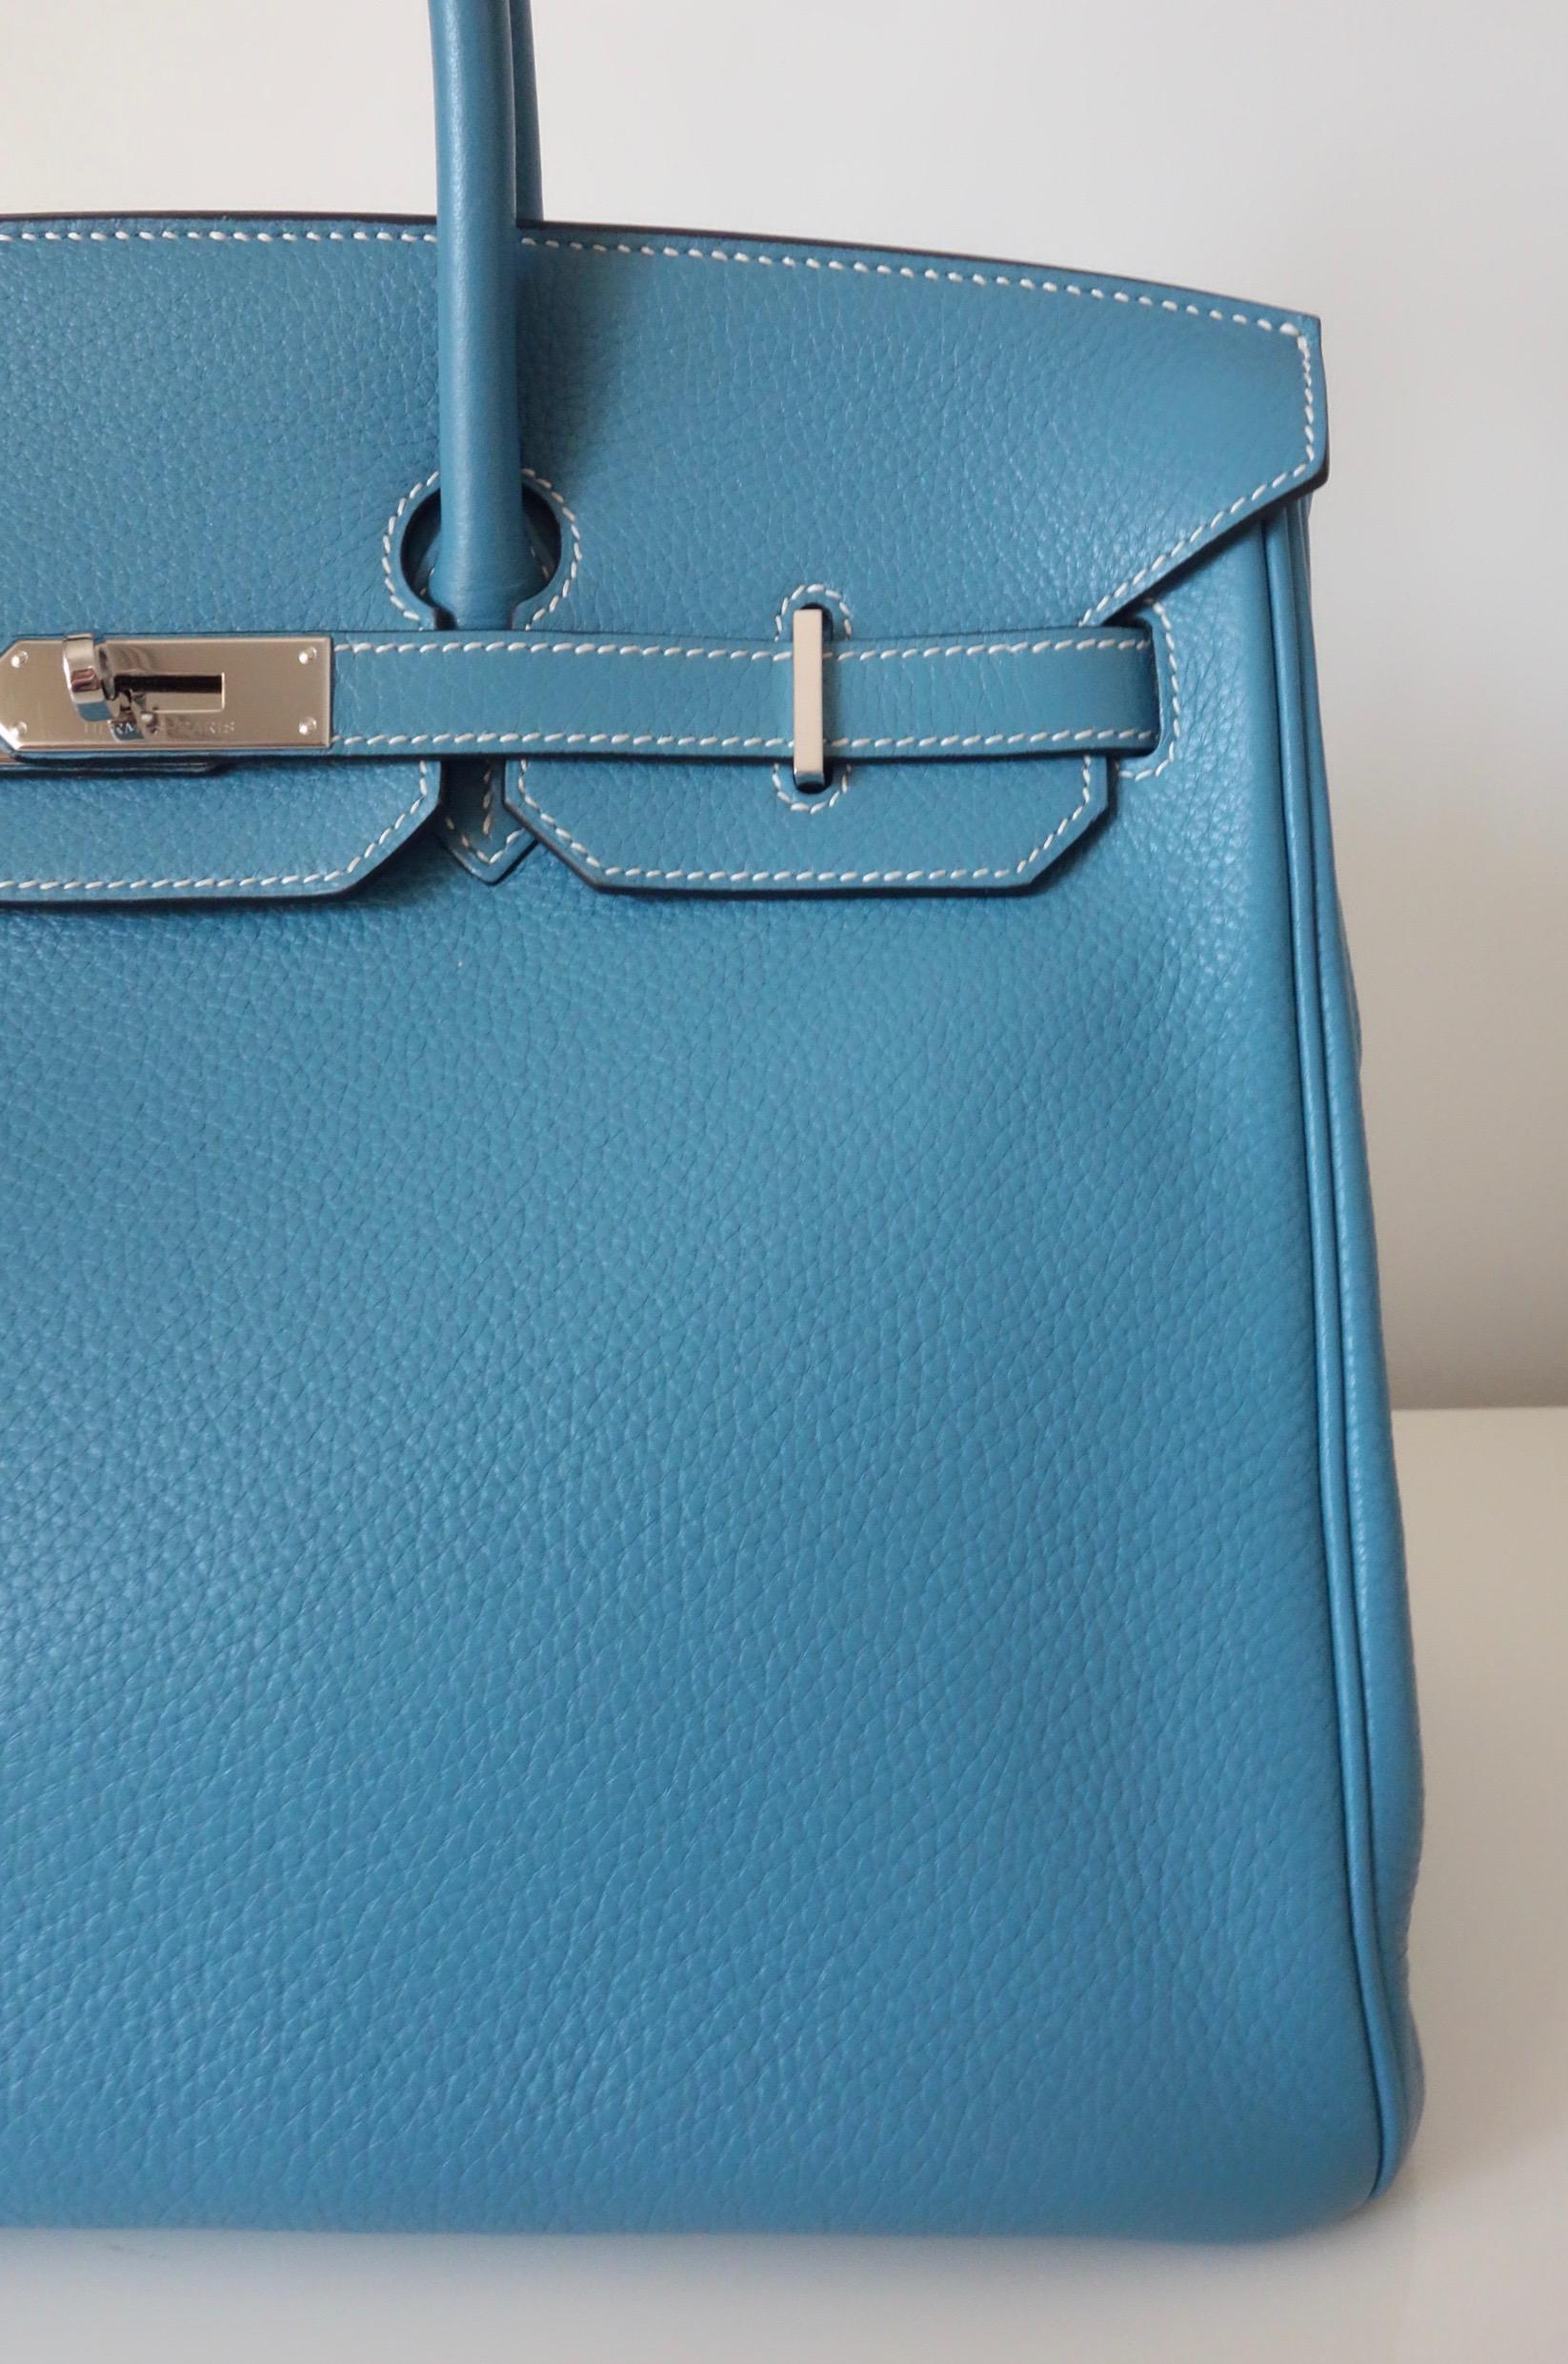 Hermès Taurillon Clemence Bleu Jean PHW 35 cm Birkin Top Handle Bag 6